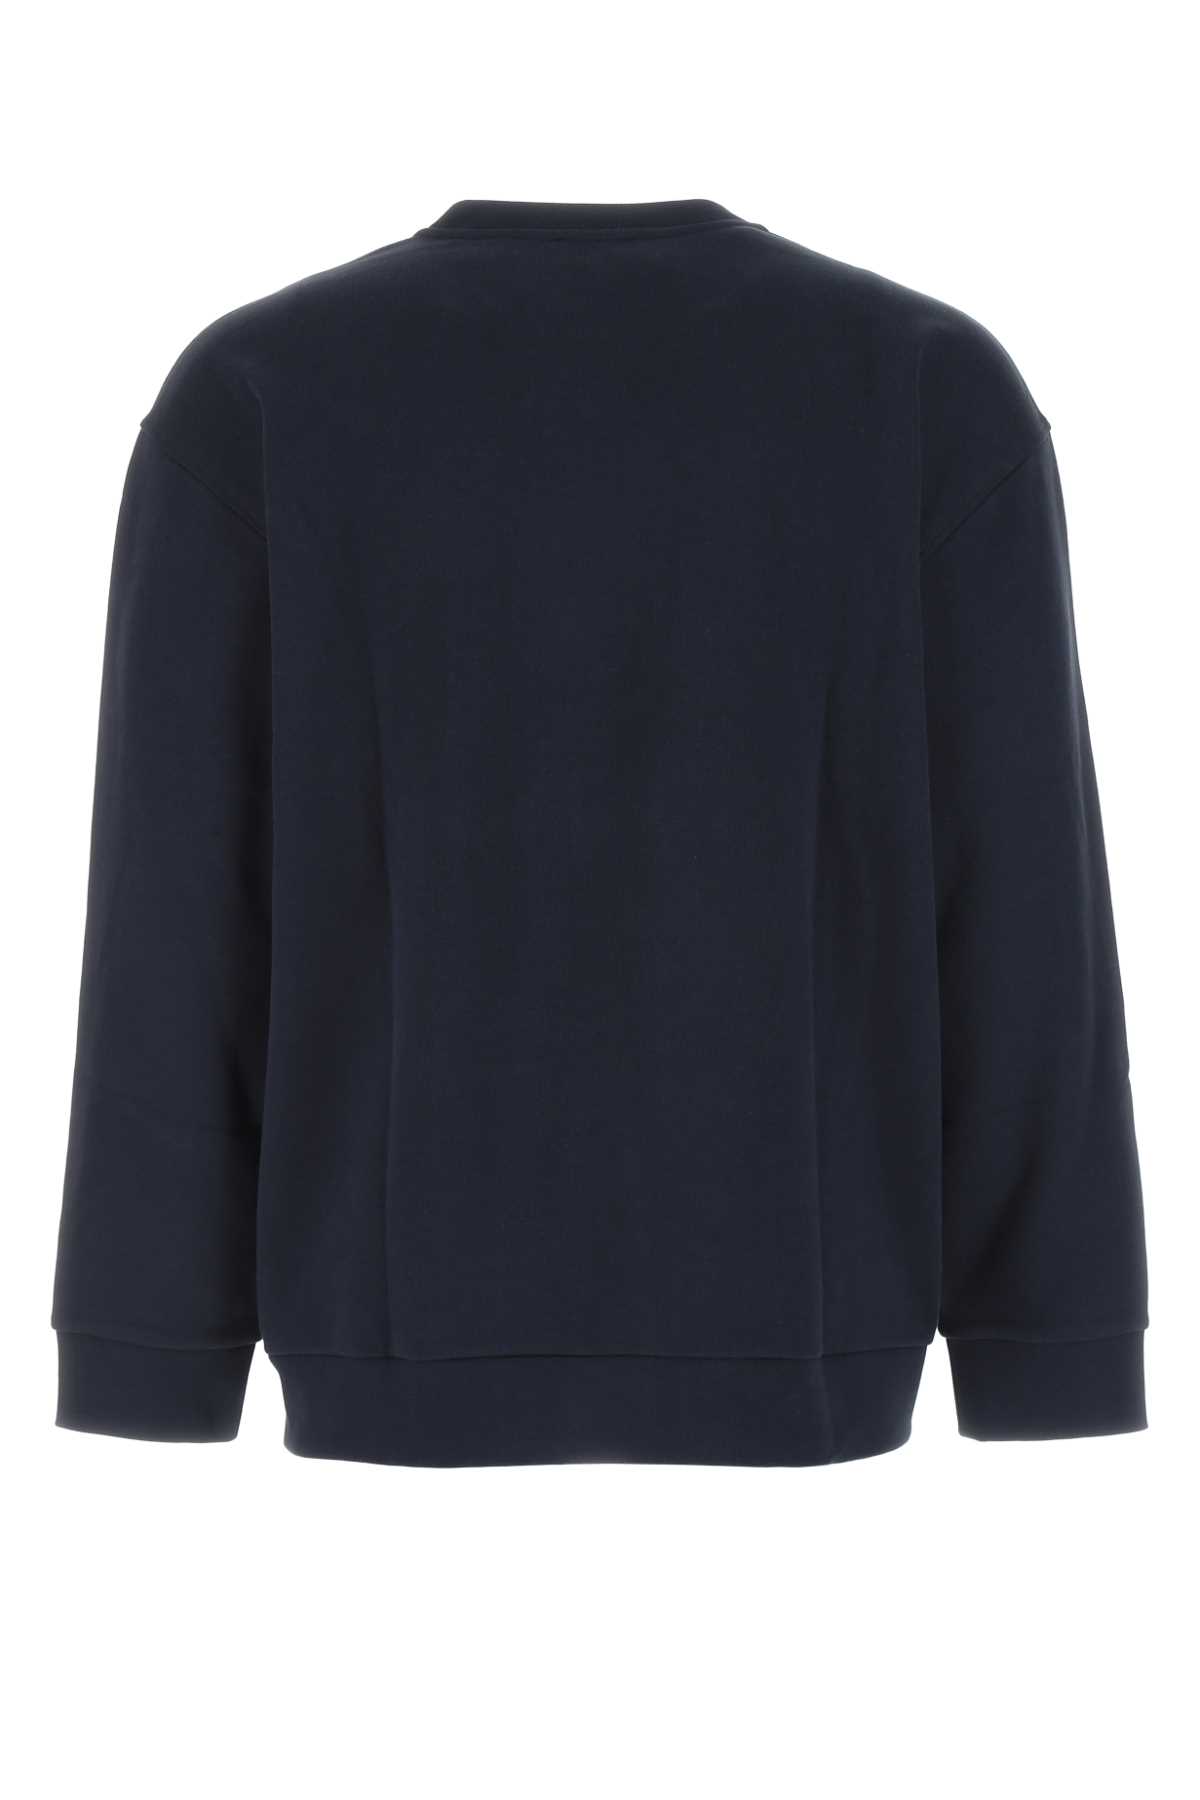 Shop Apc Navy Blue Stretch Cotton Oversize Sweatshirt